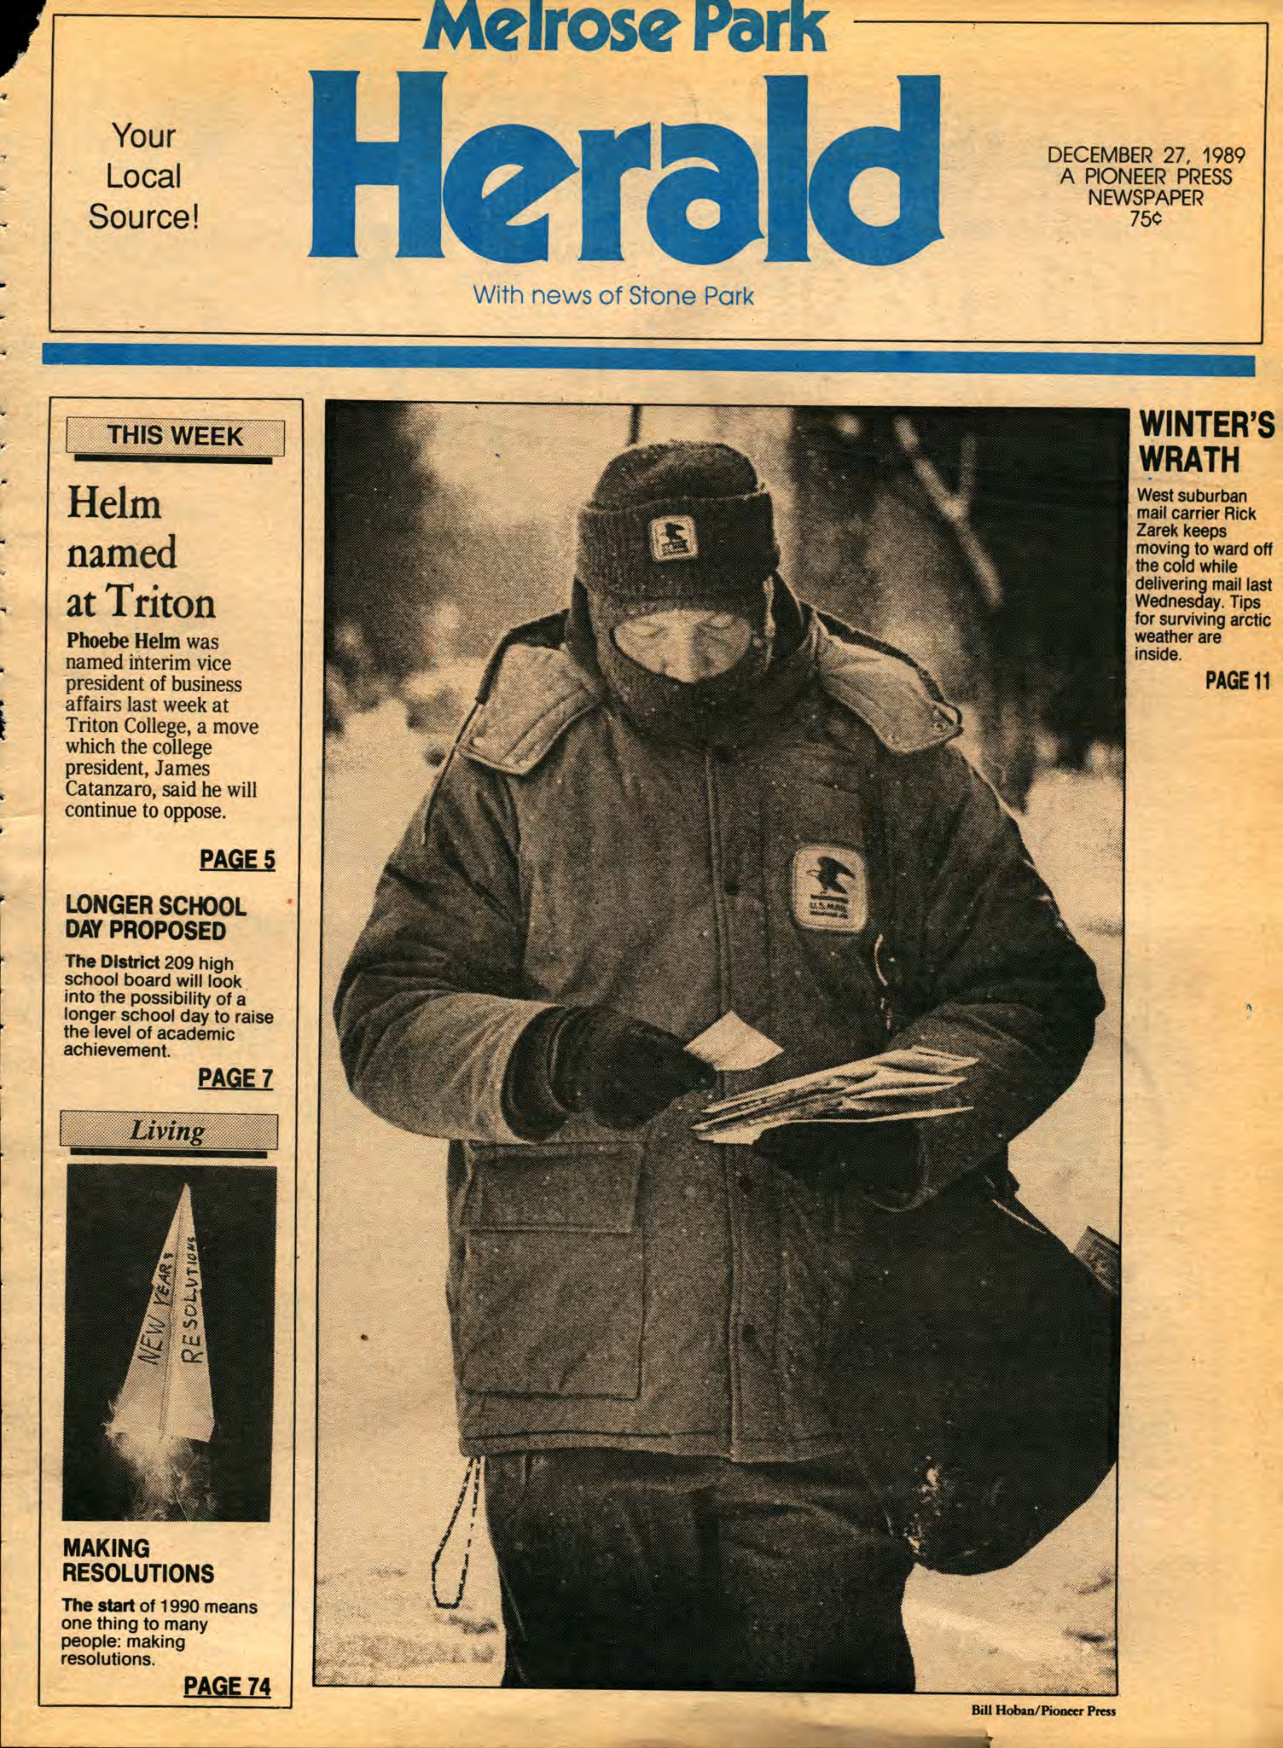 The Herald – 19891227